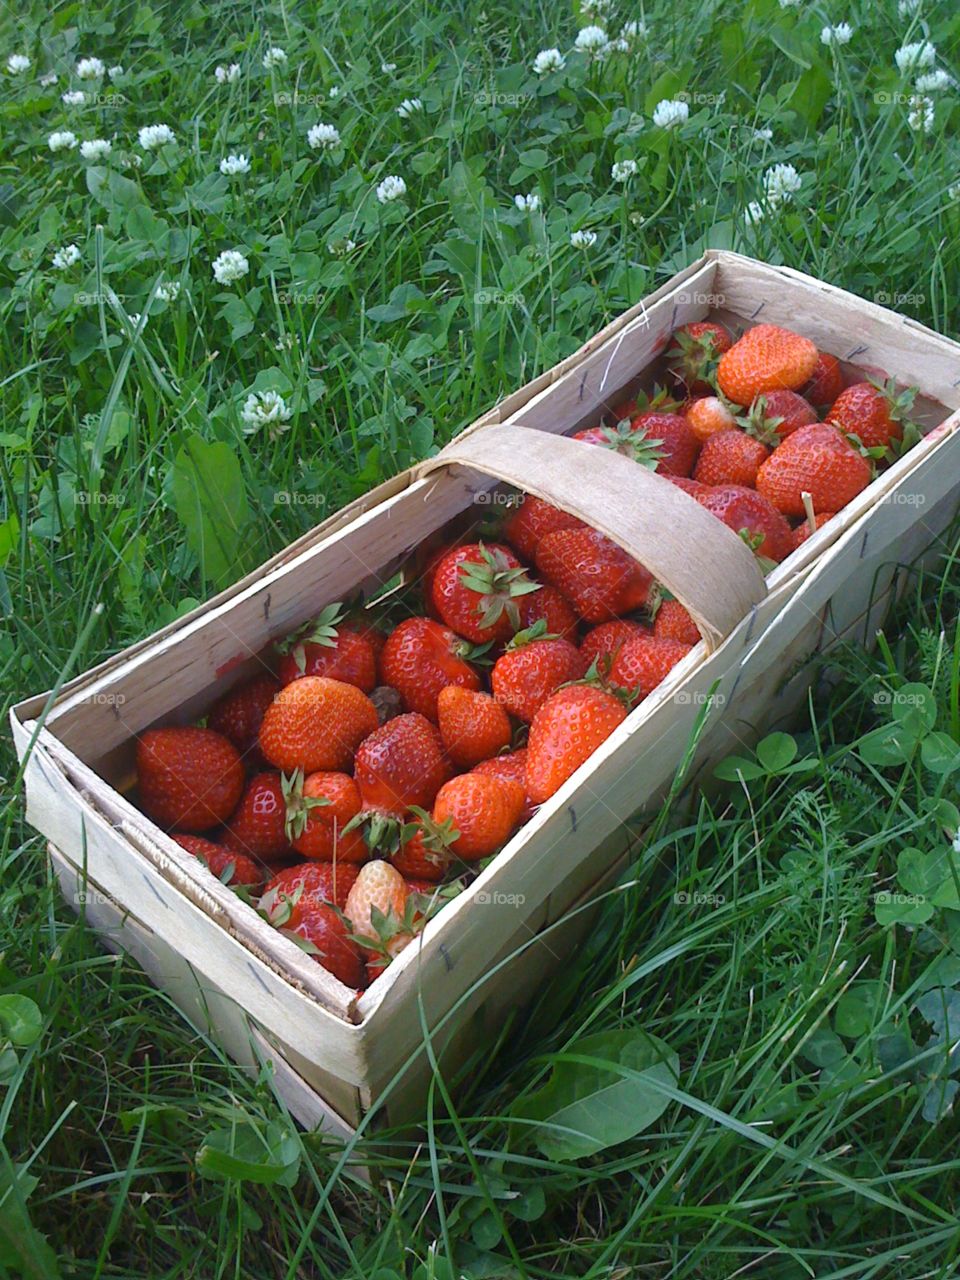 Strawberries in the basket